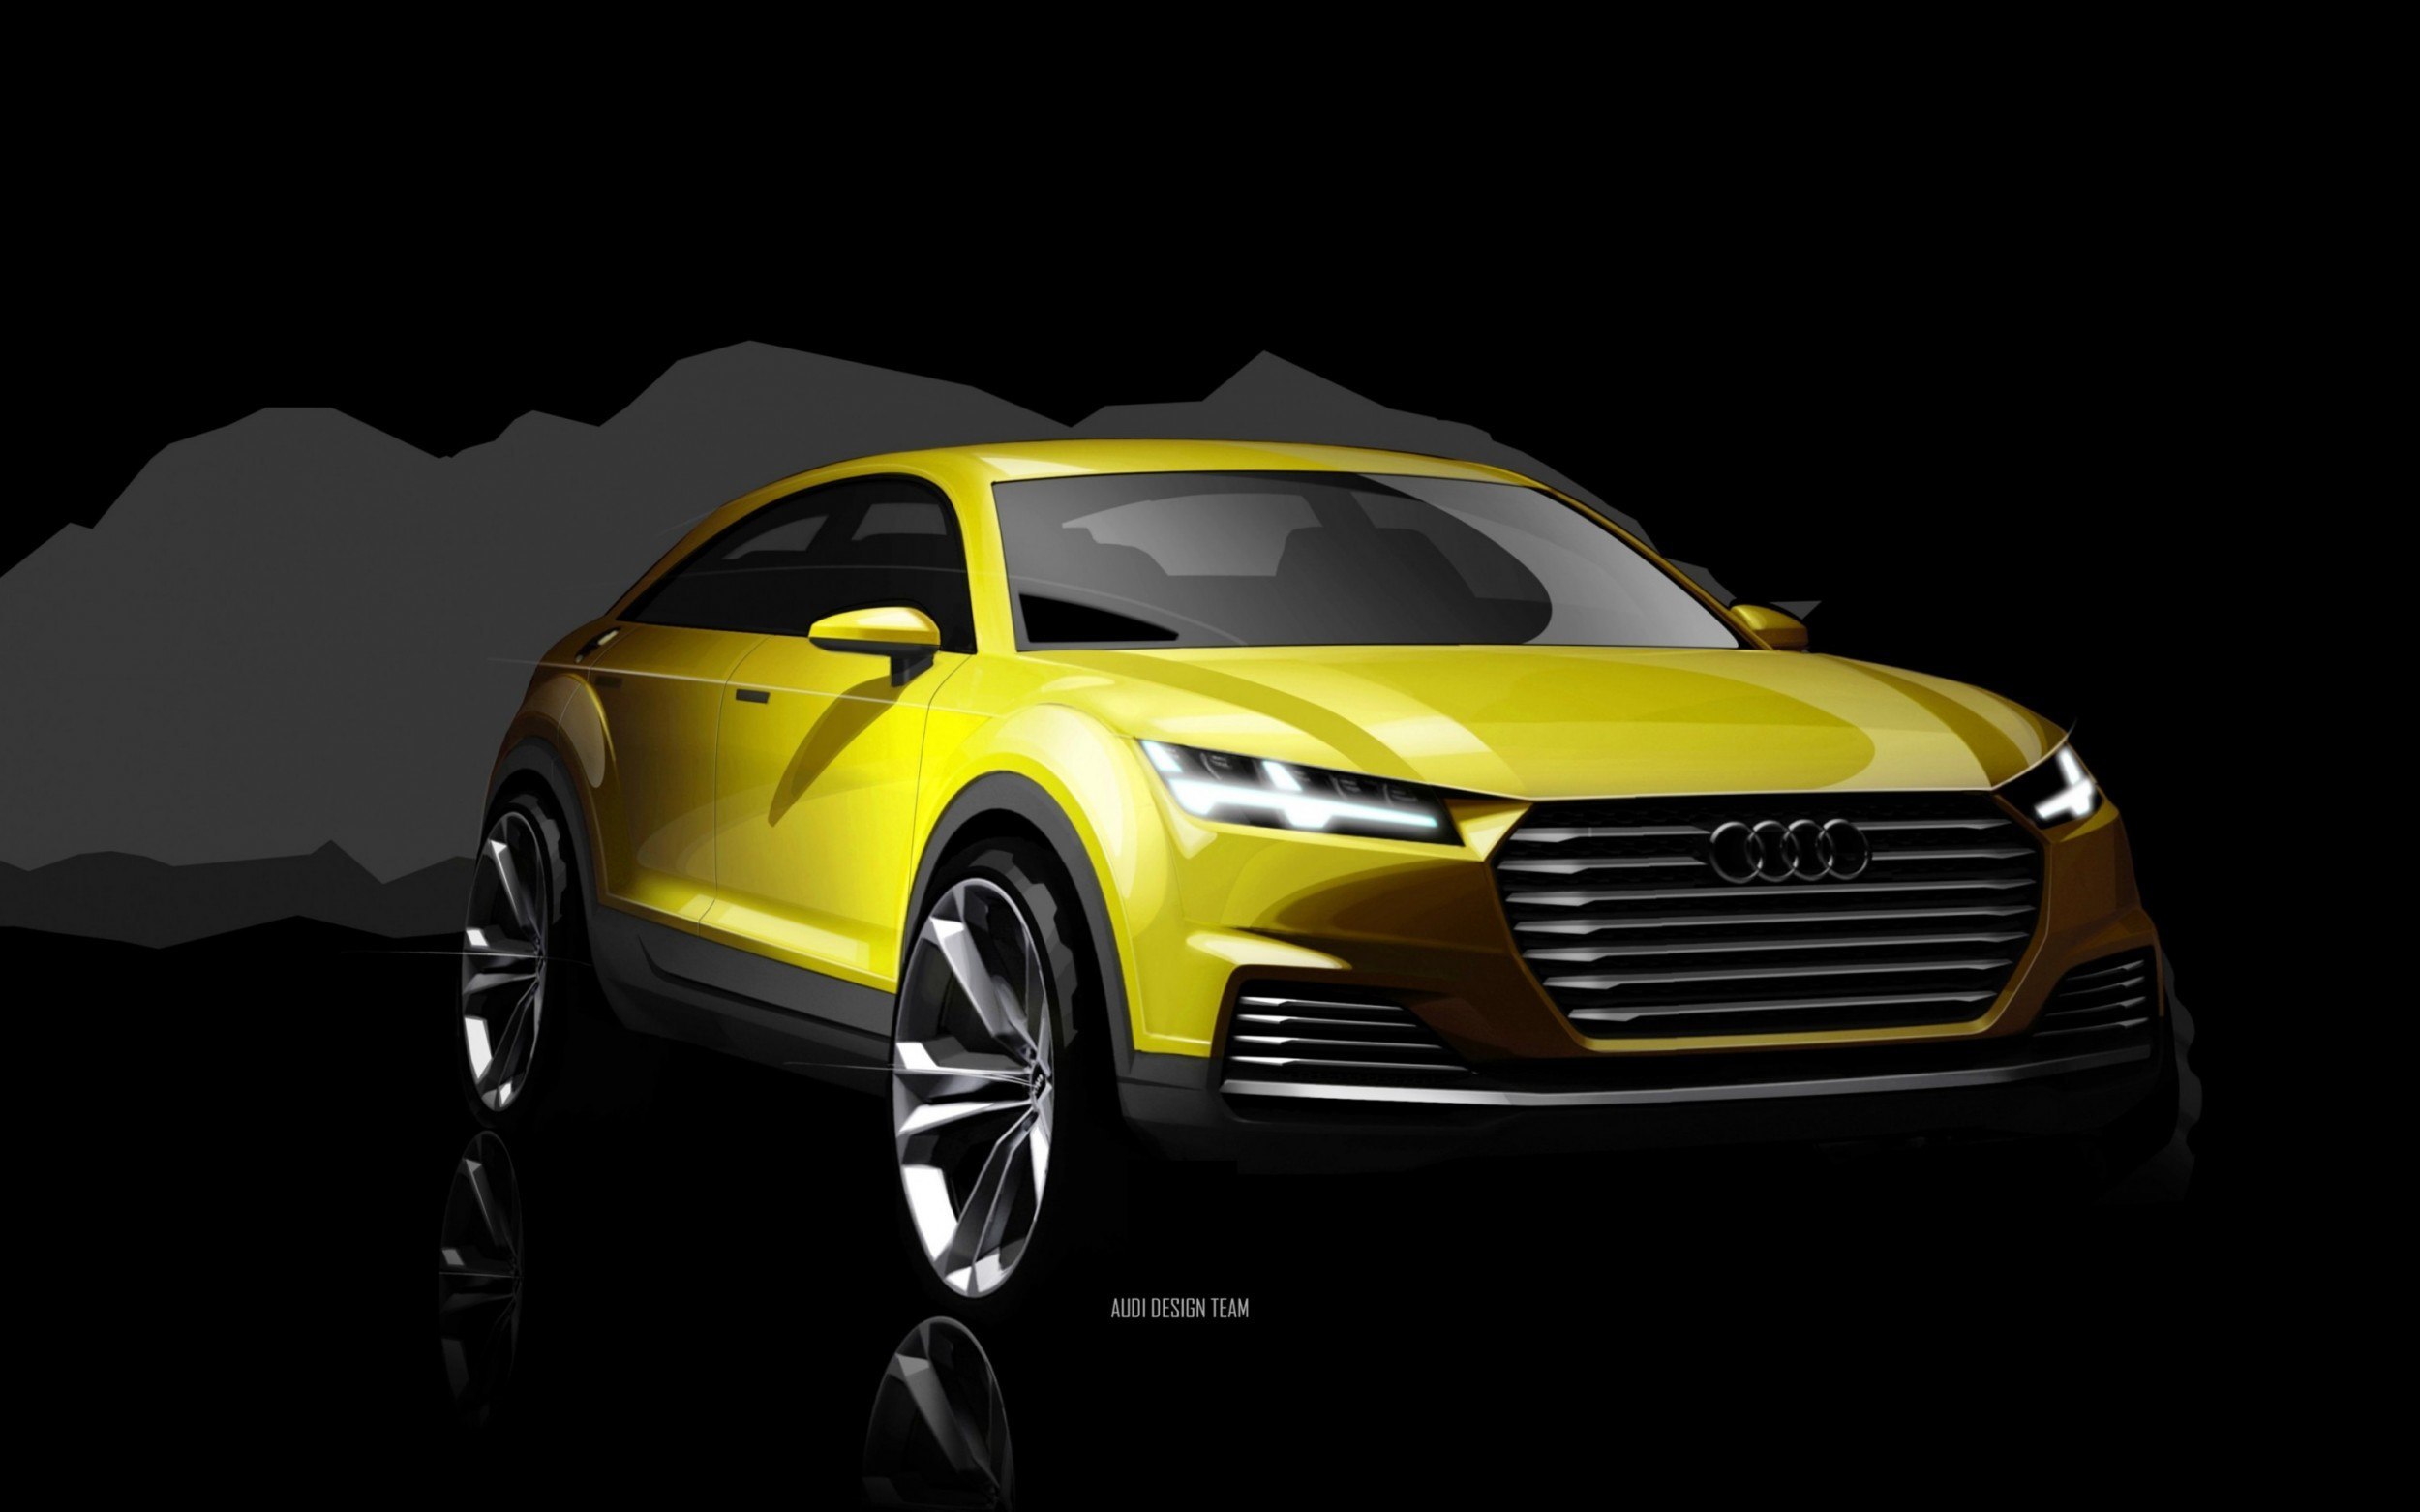 Audi Tt Offroad Concept Wallpapers